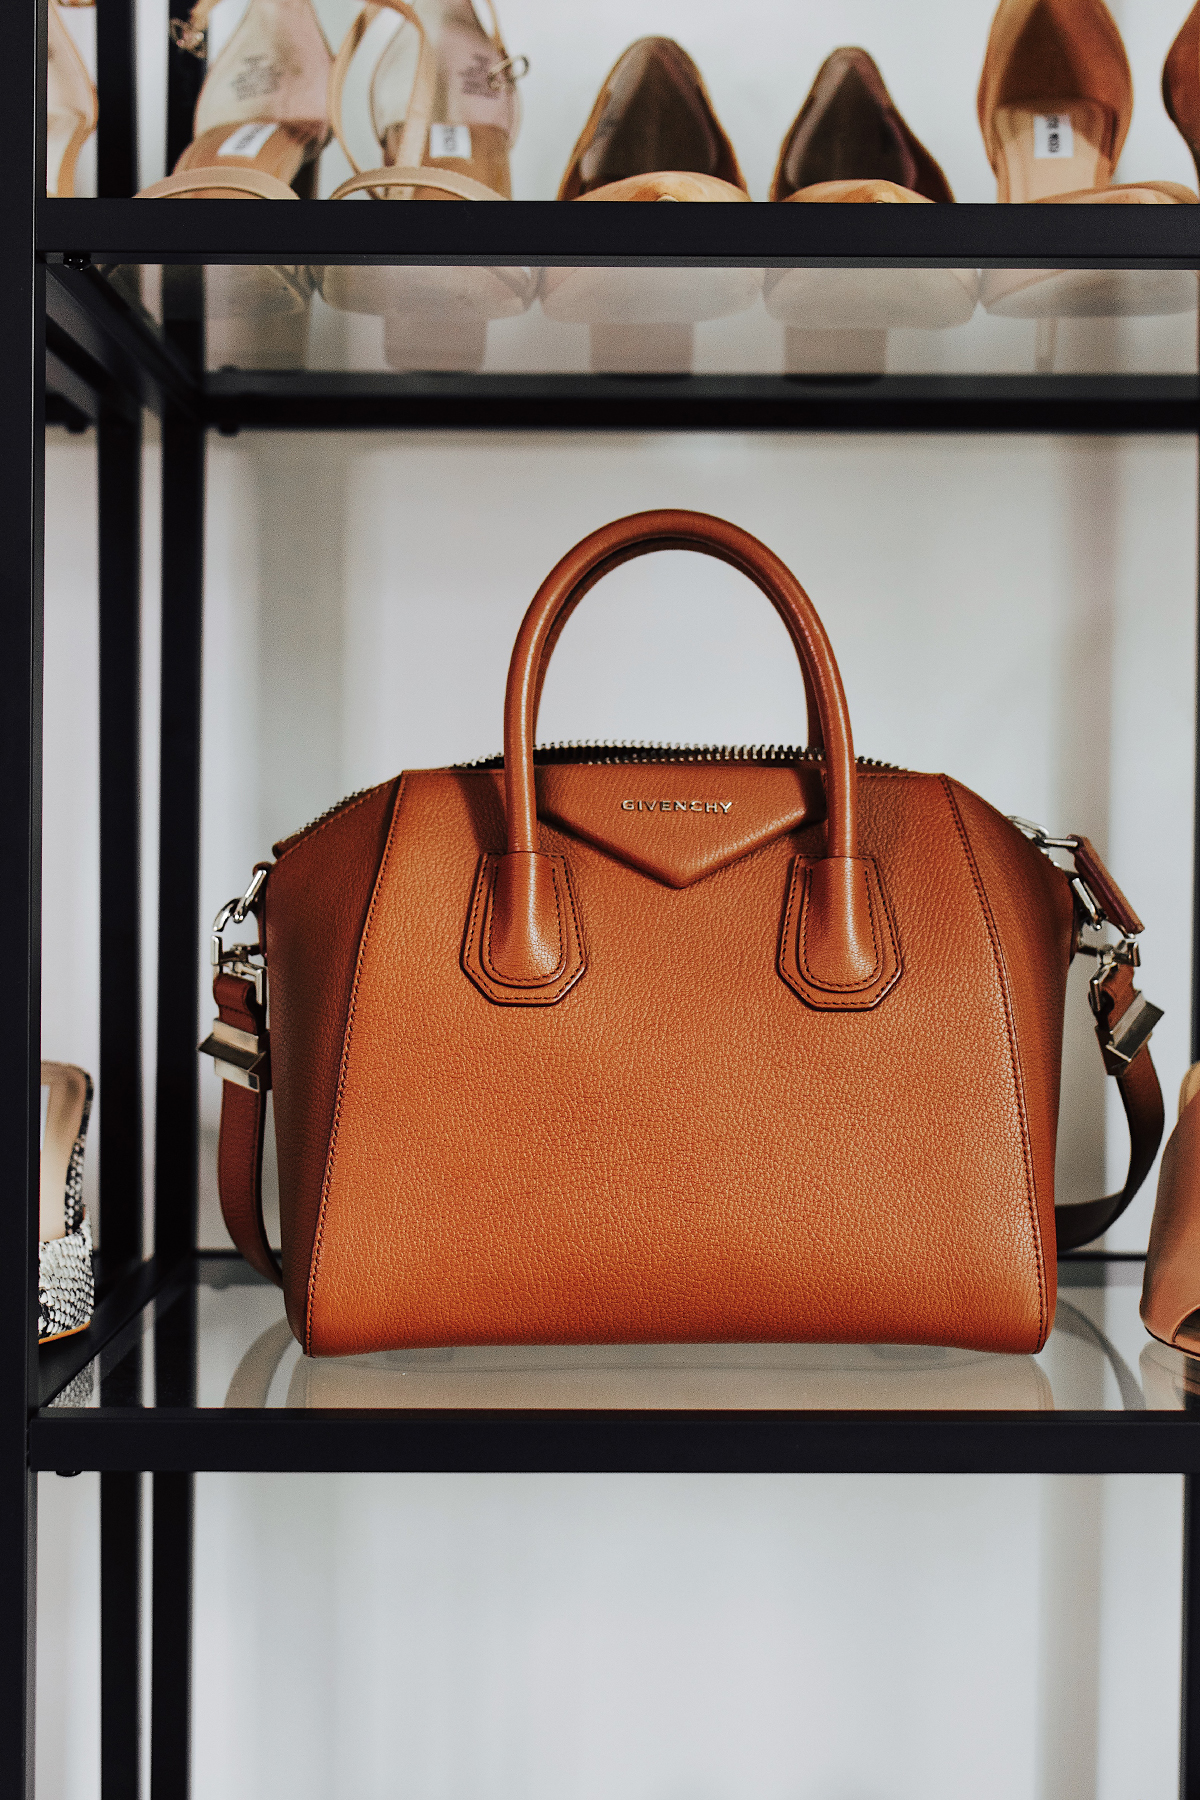 Where I Buy Pre-Owned Designer Handbags | Fashion Jackson